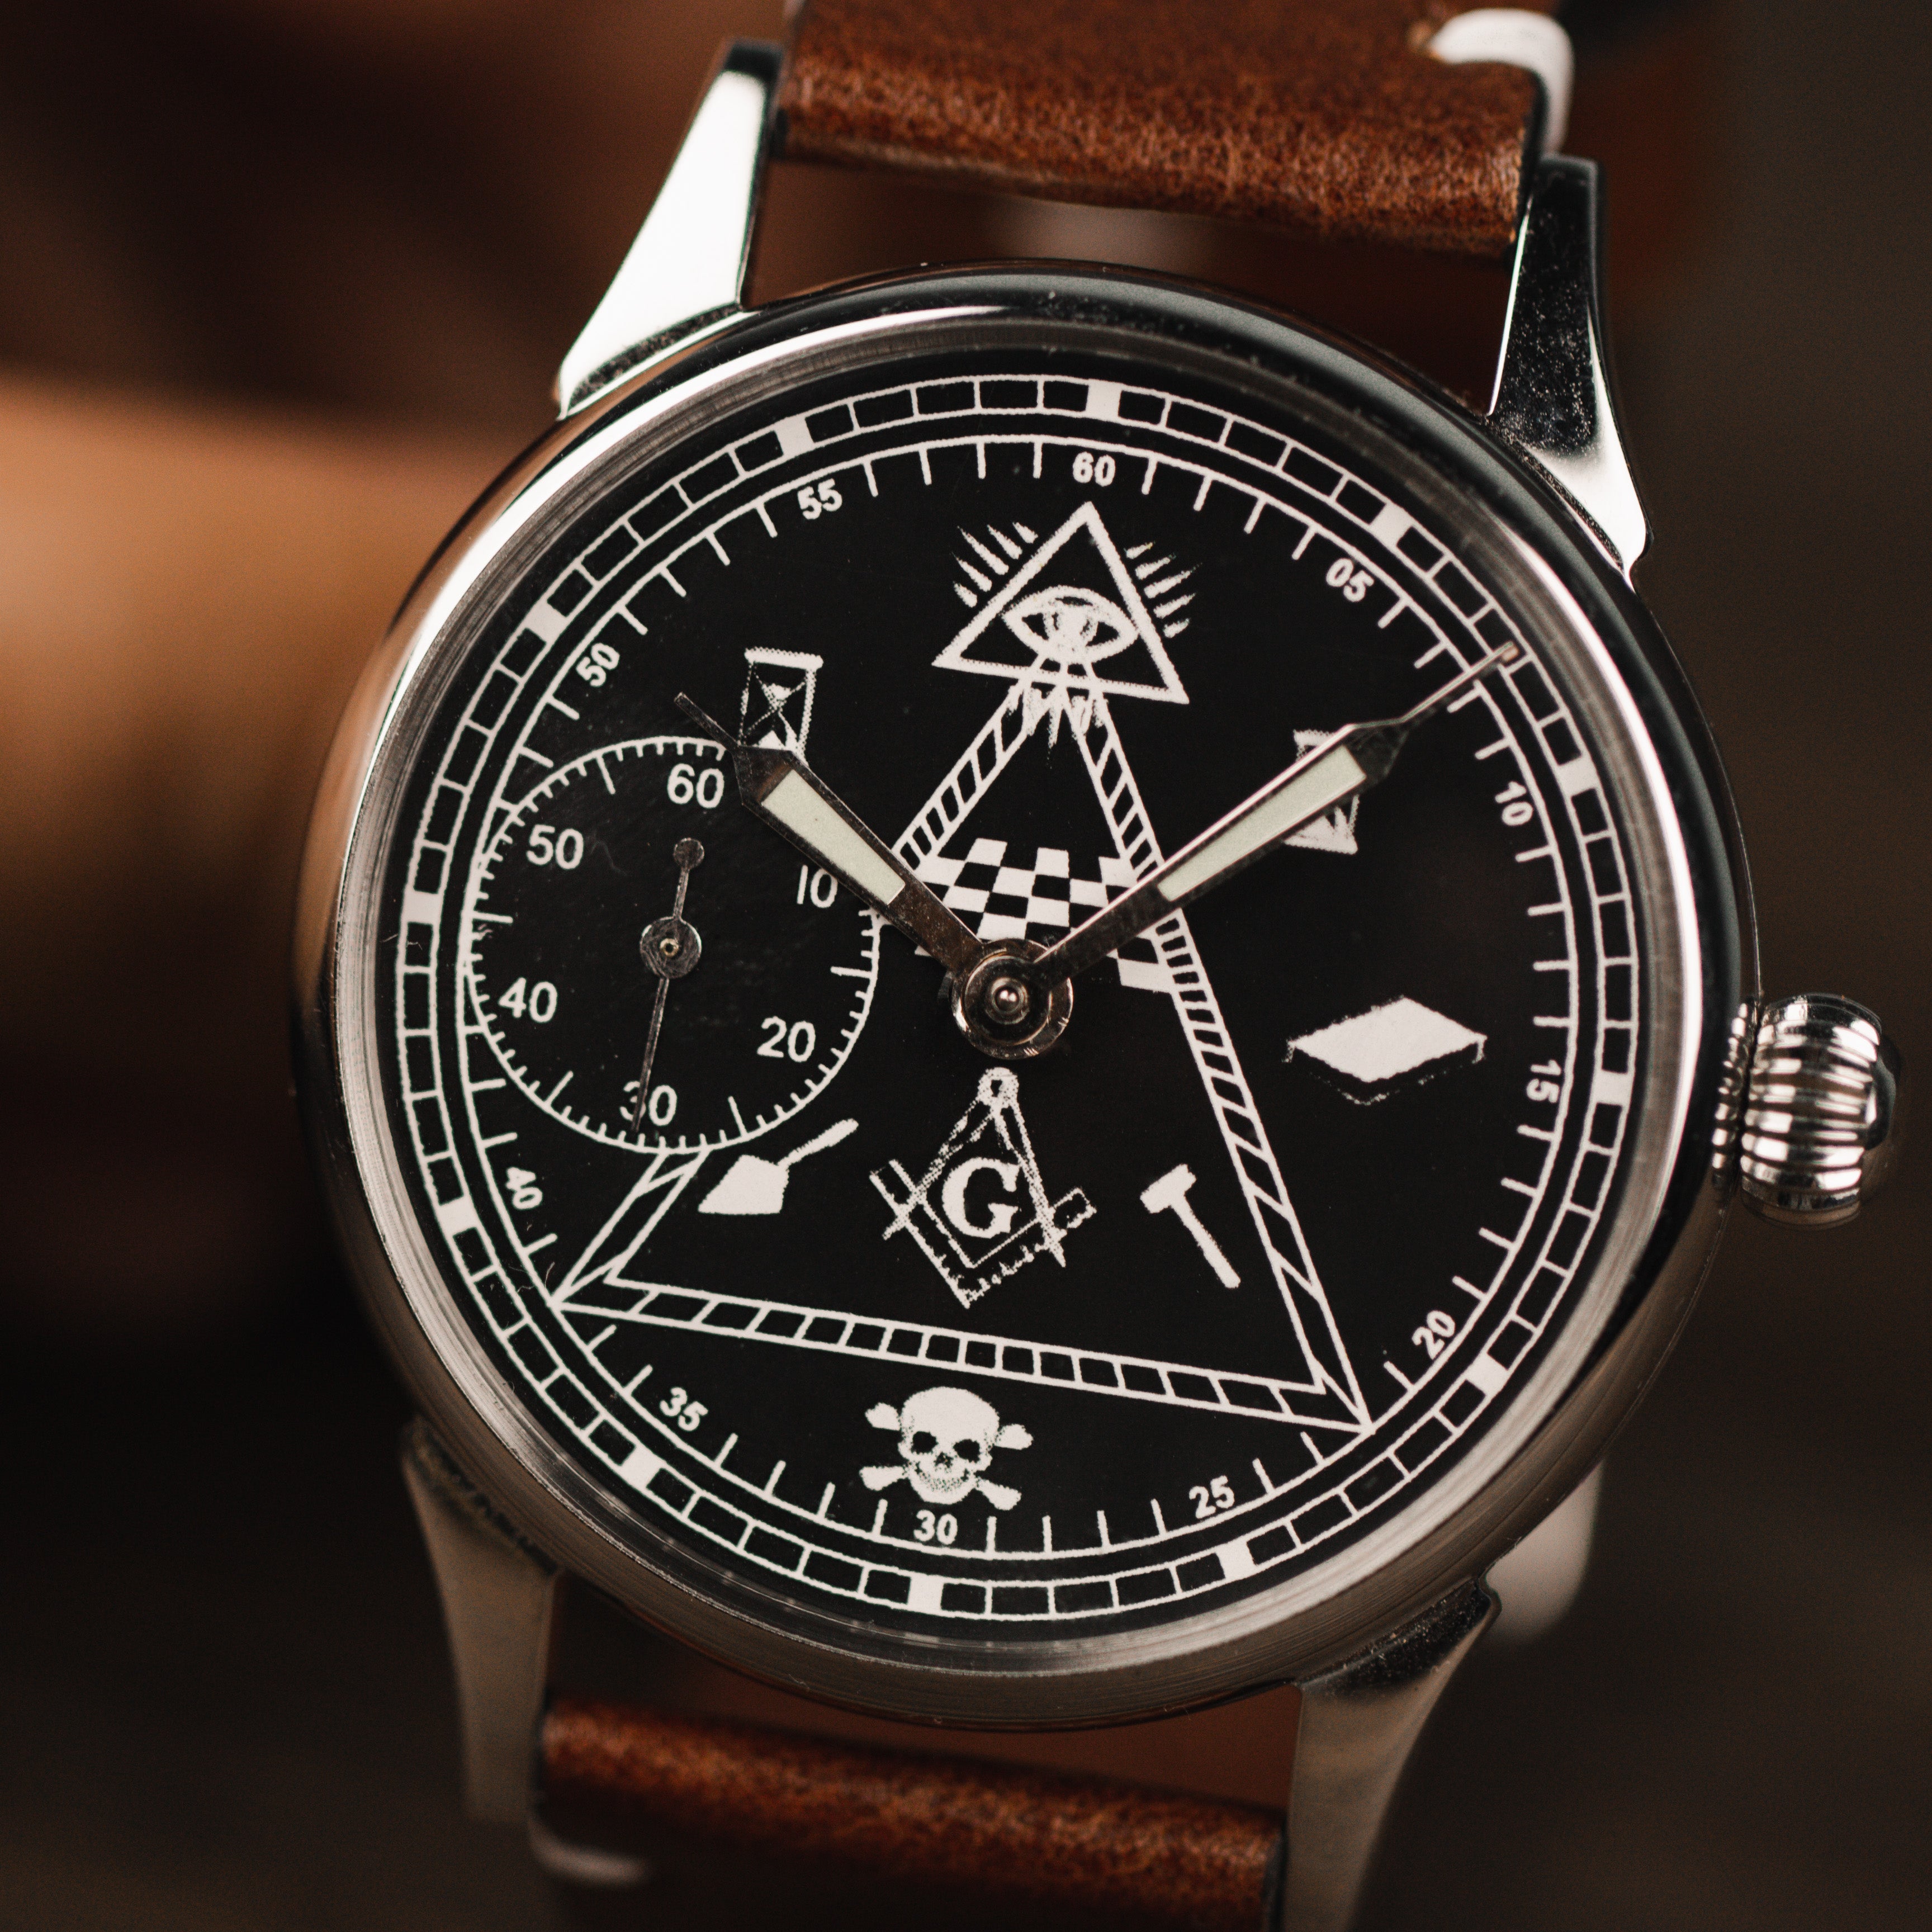 Rare vintage soviet wrist watch Poljot - Masonic with leather nato strap